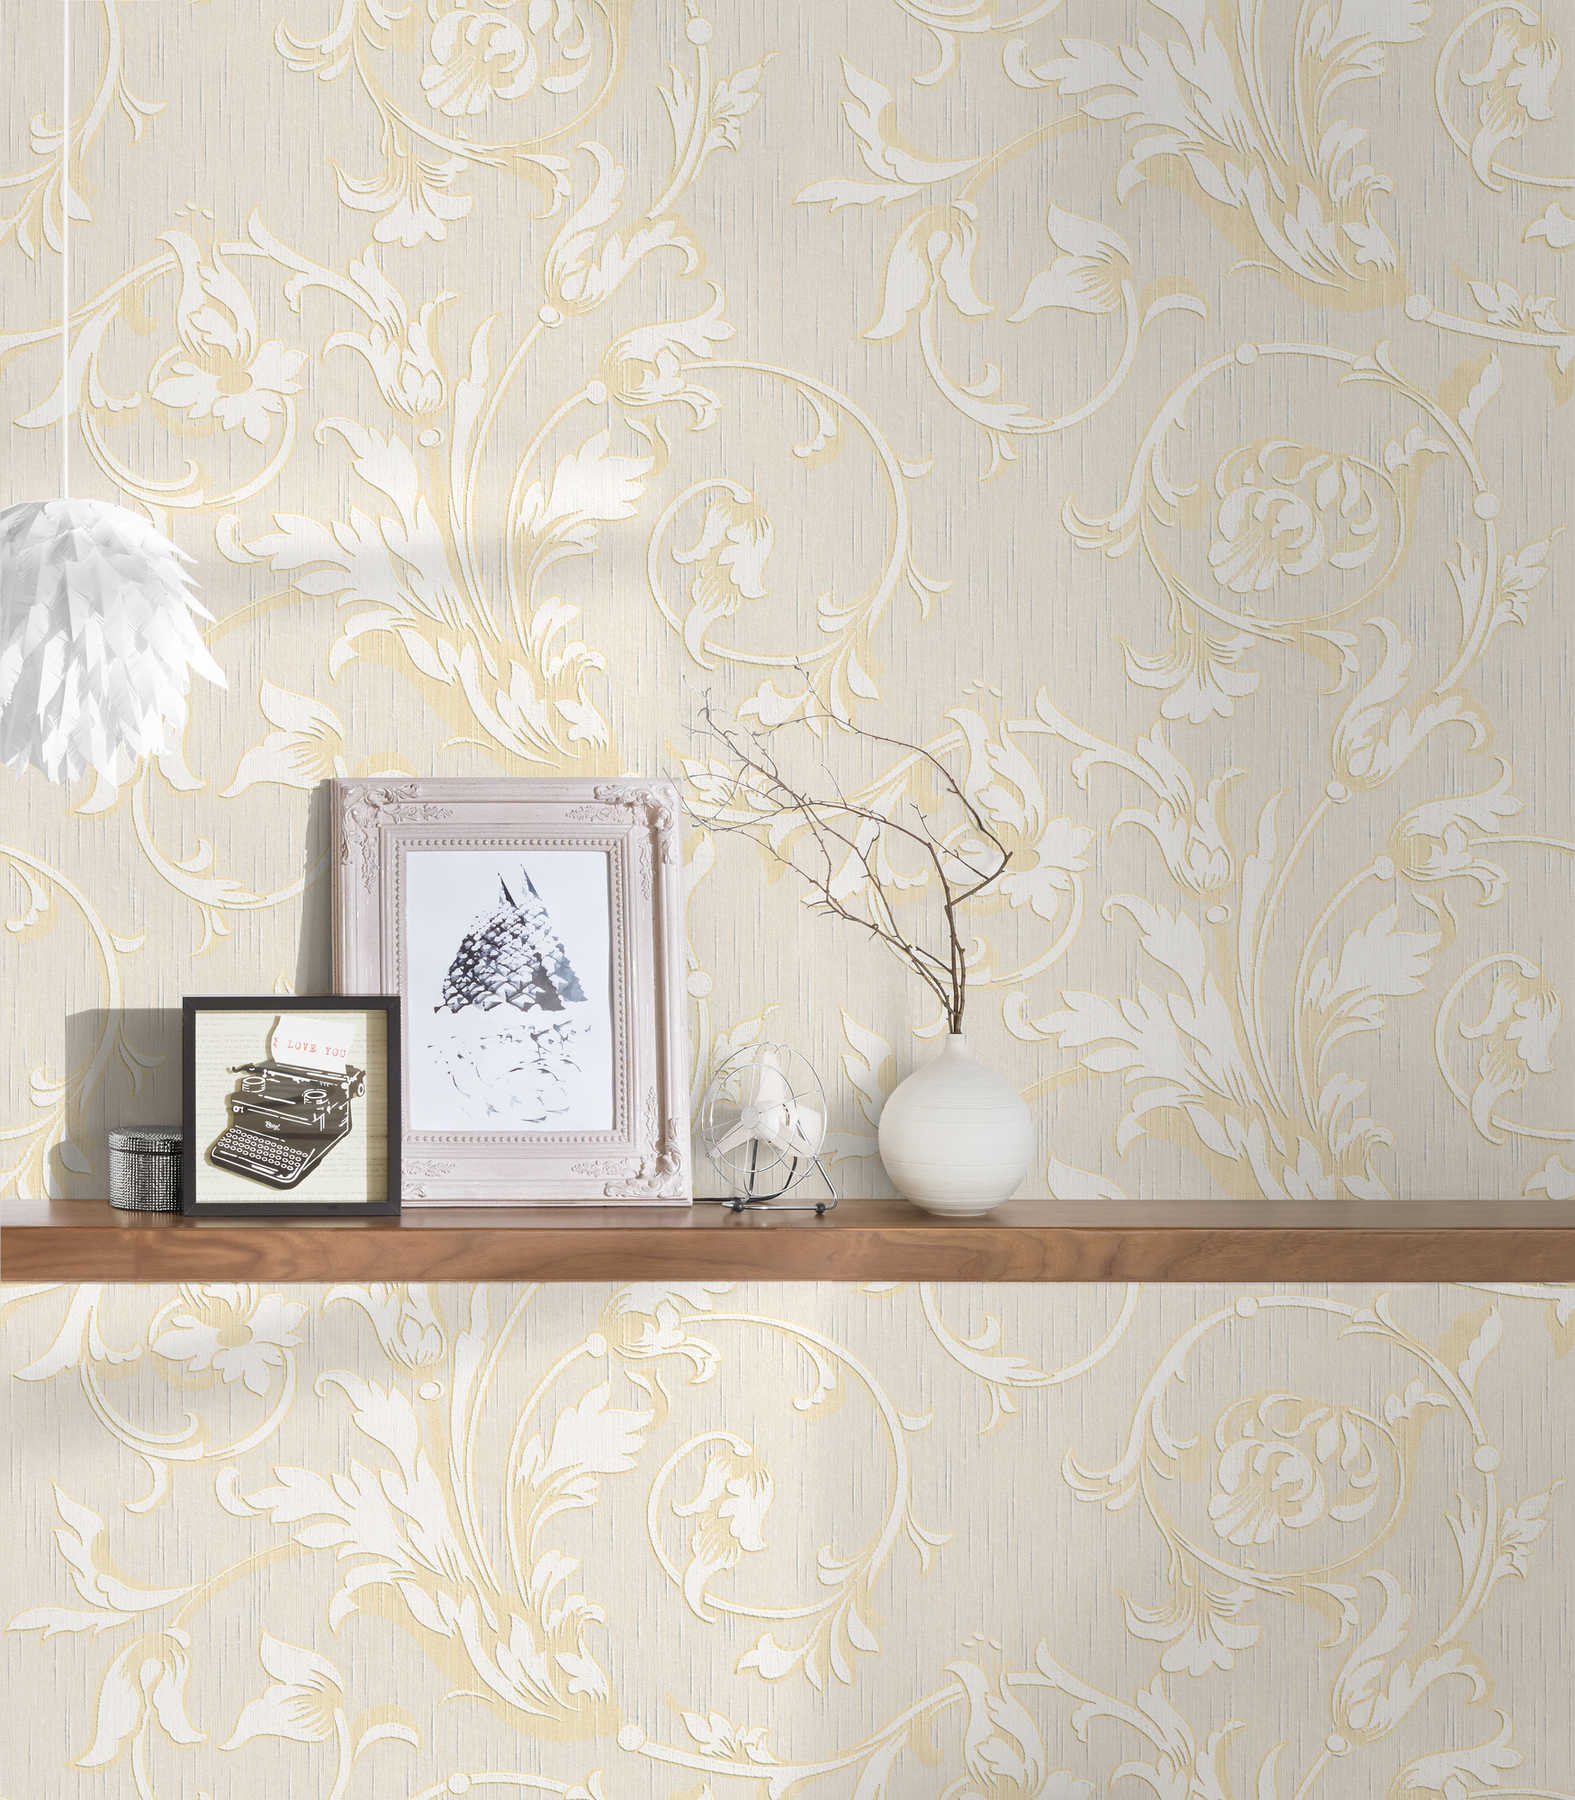             Hermitage behang met bloemenornament - beige, crème
        